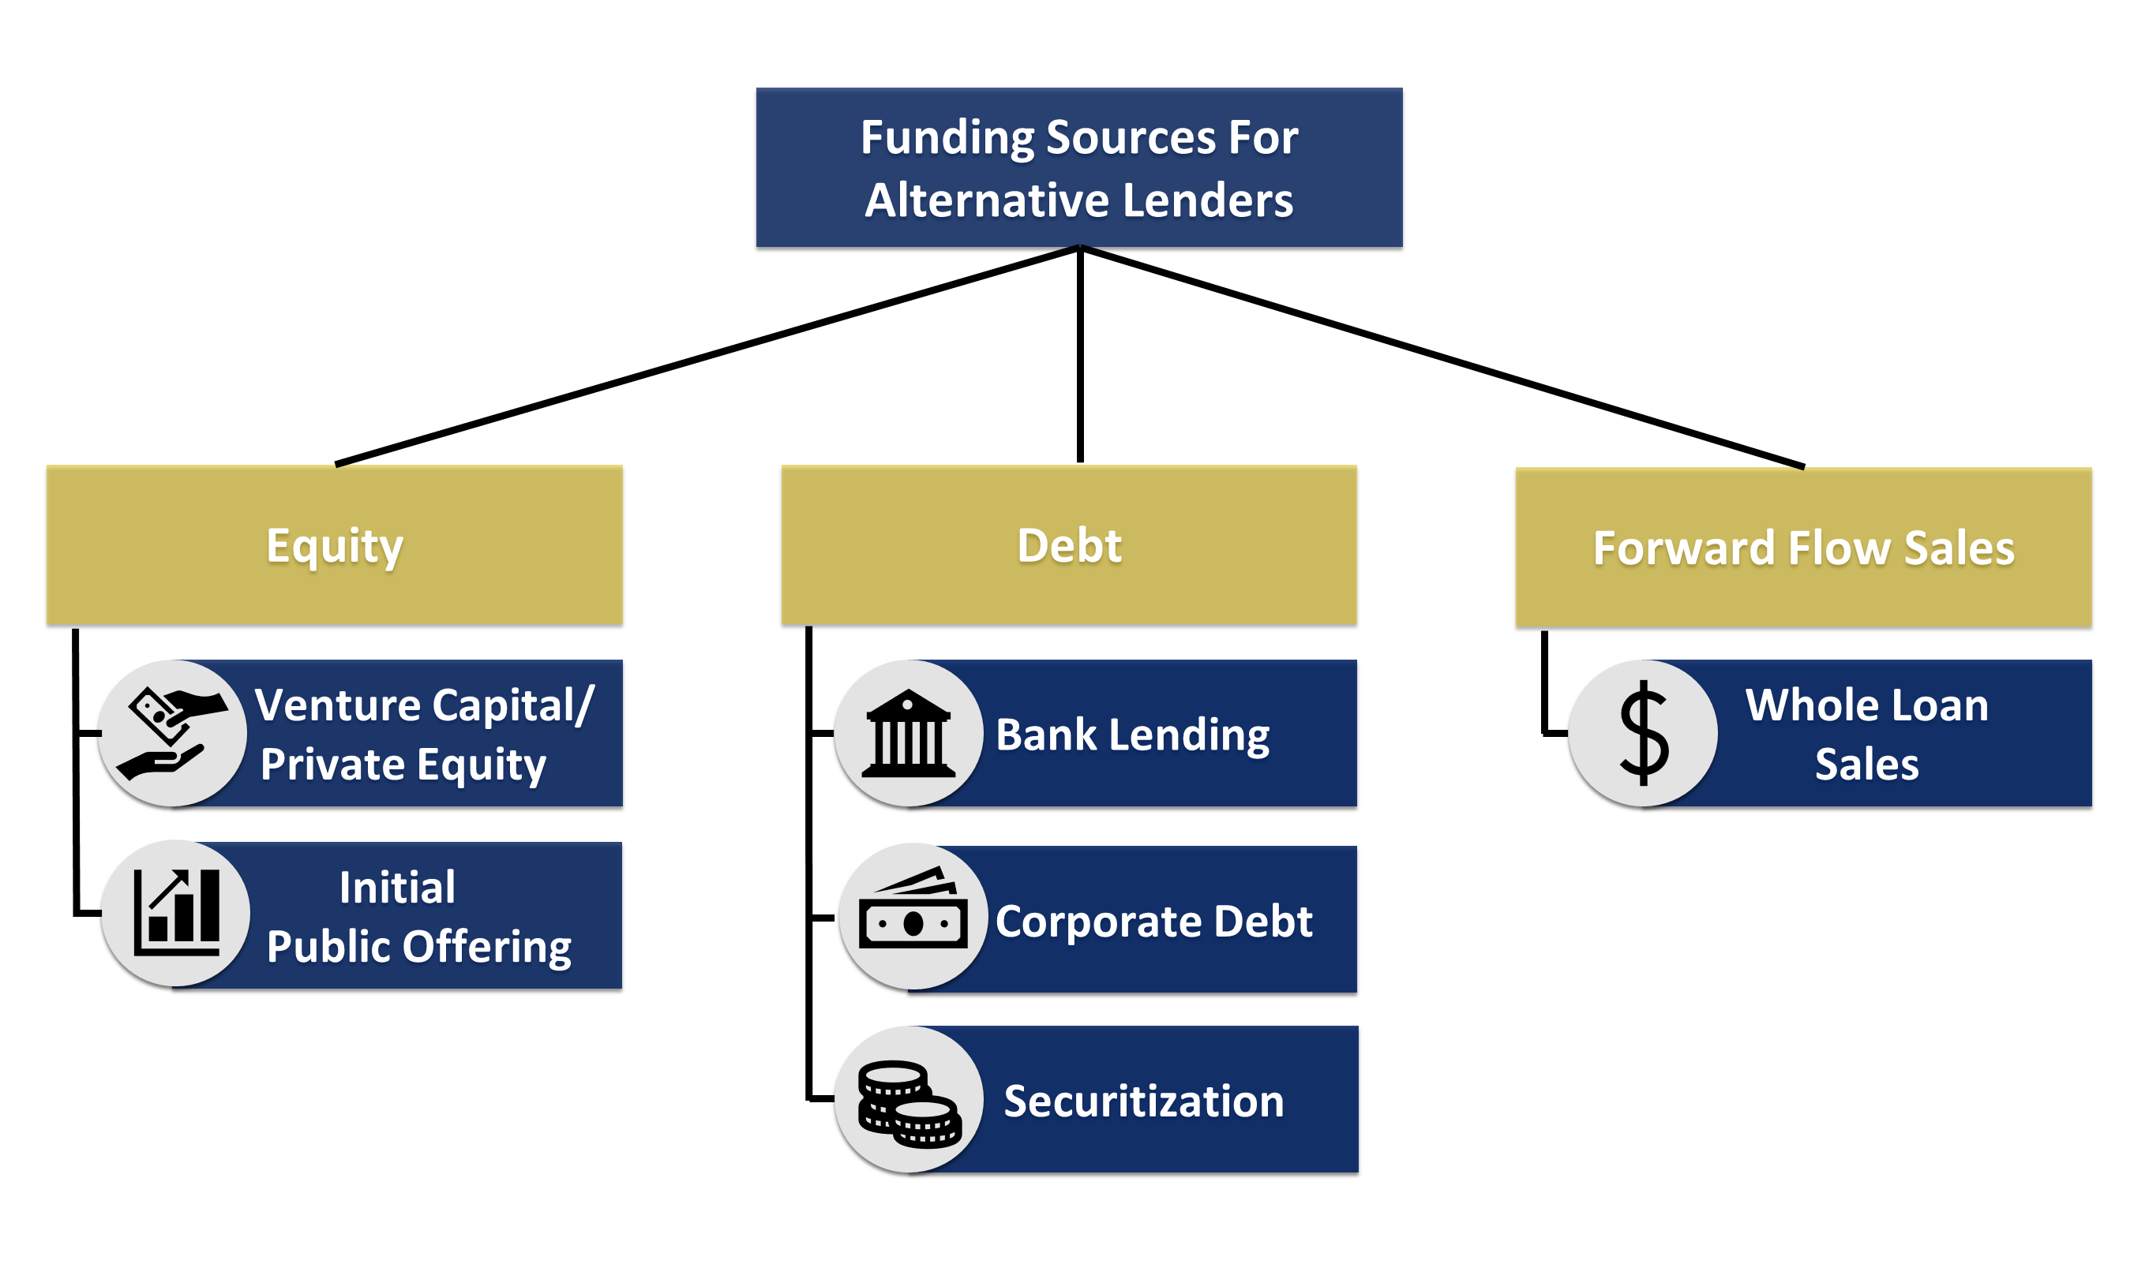 Funding sources for alternative lenders. 